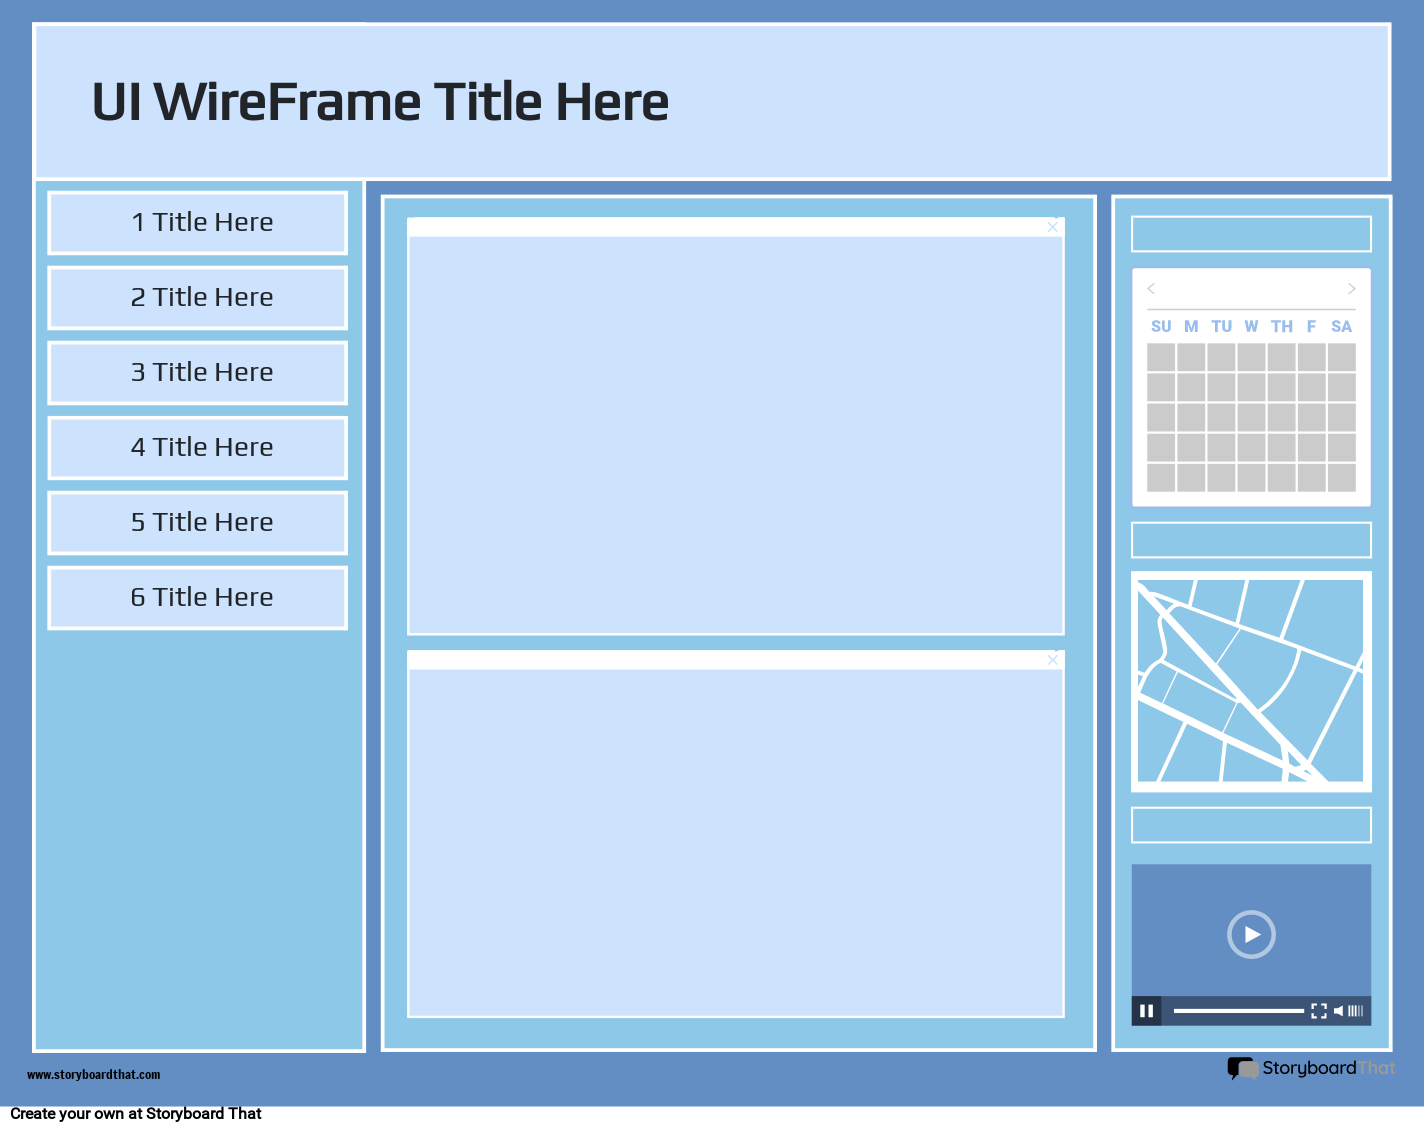 Corporate UI WireFrame Template 1